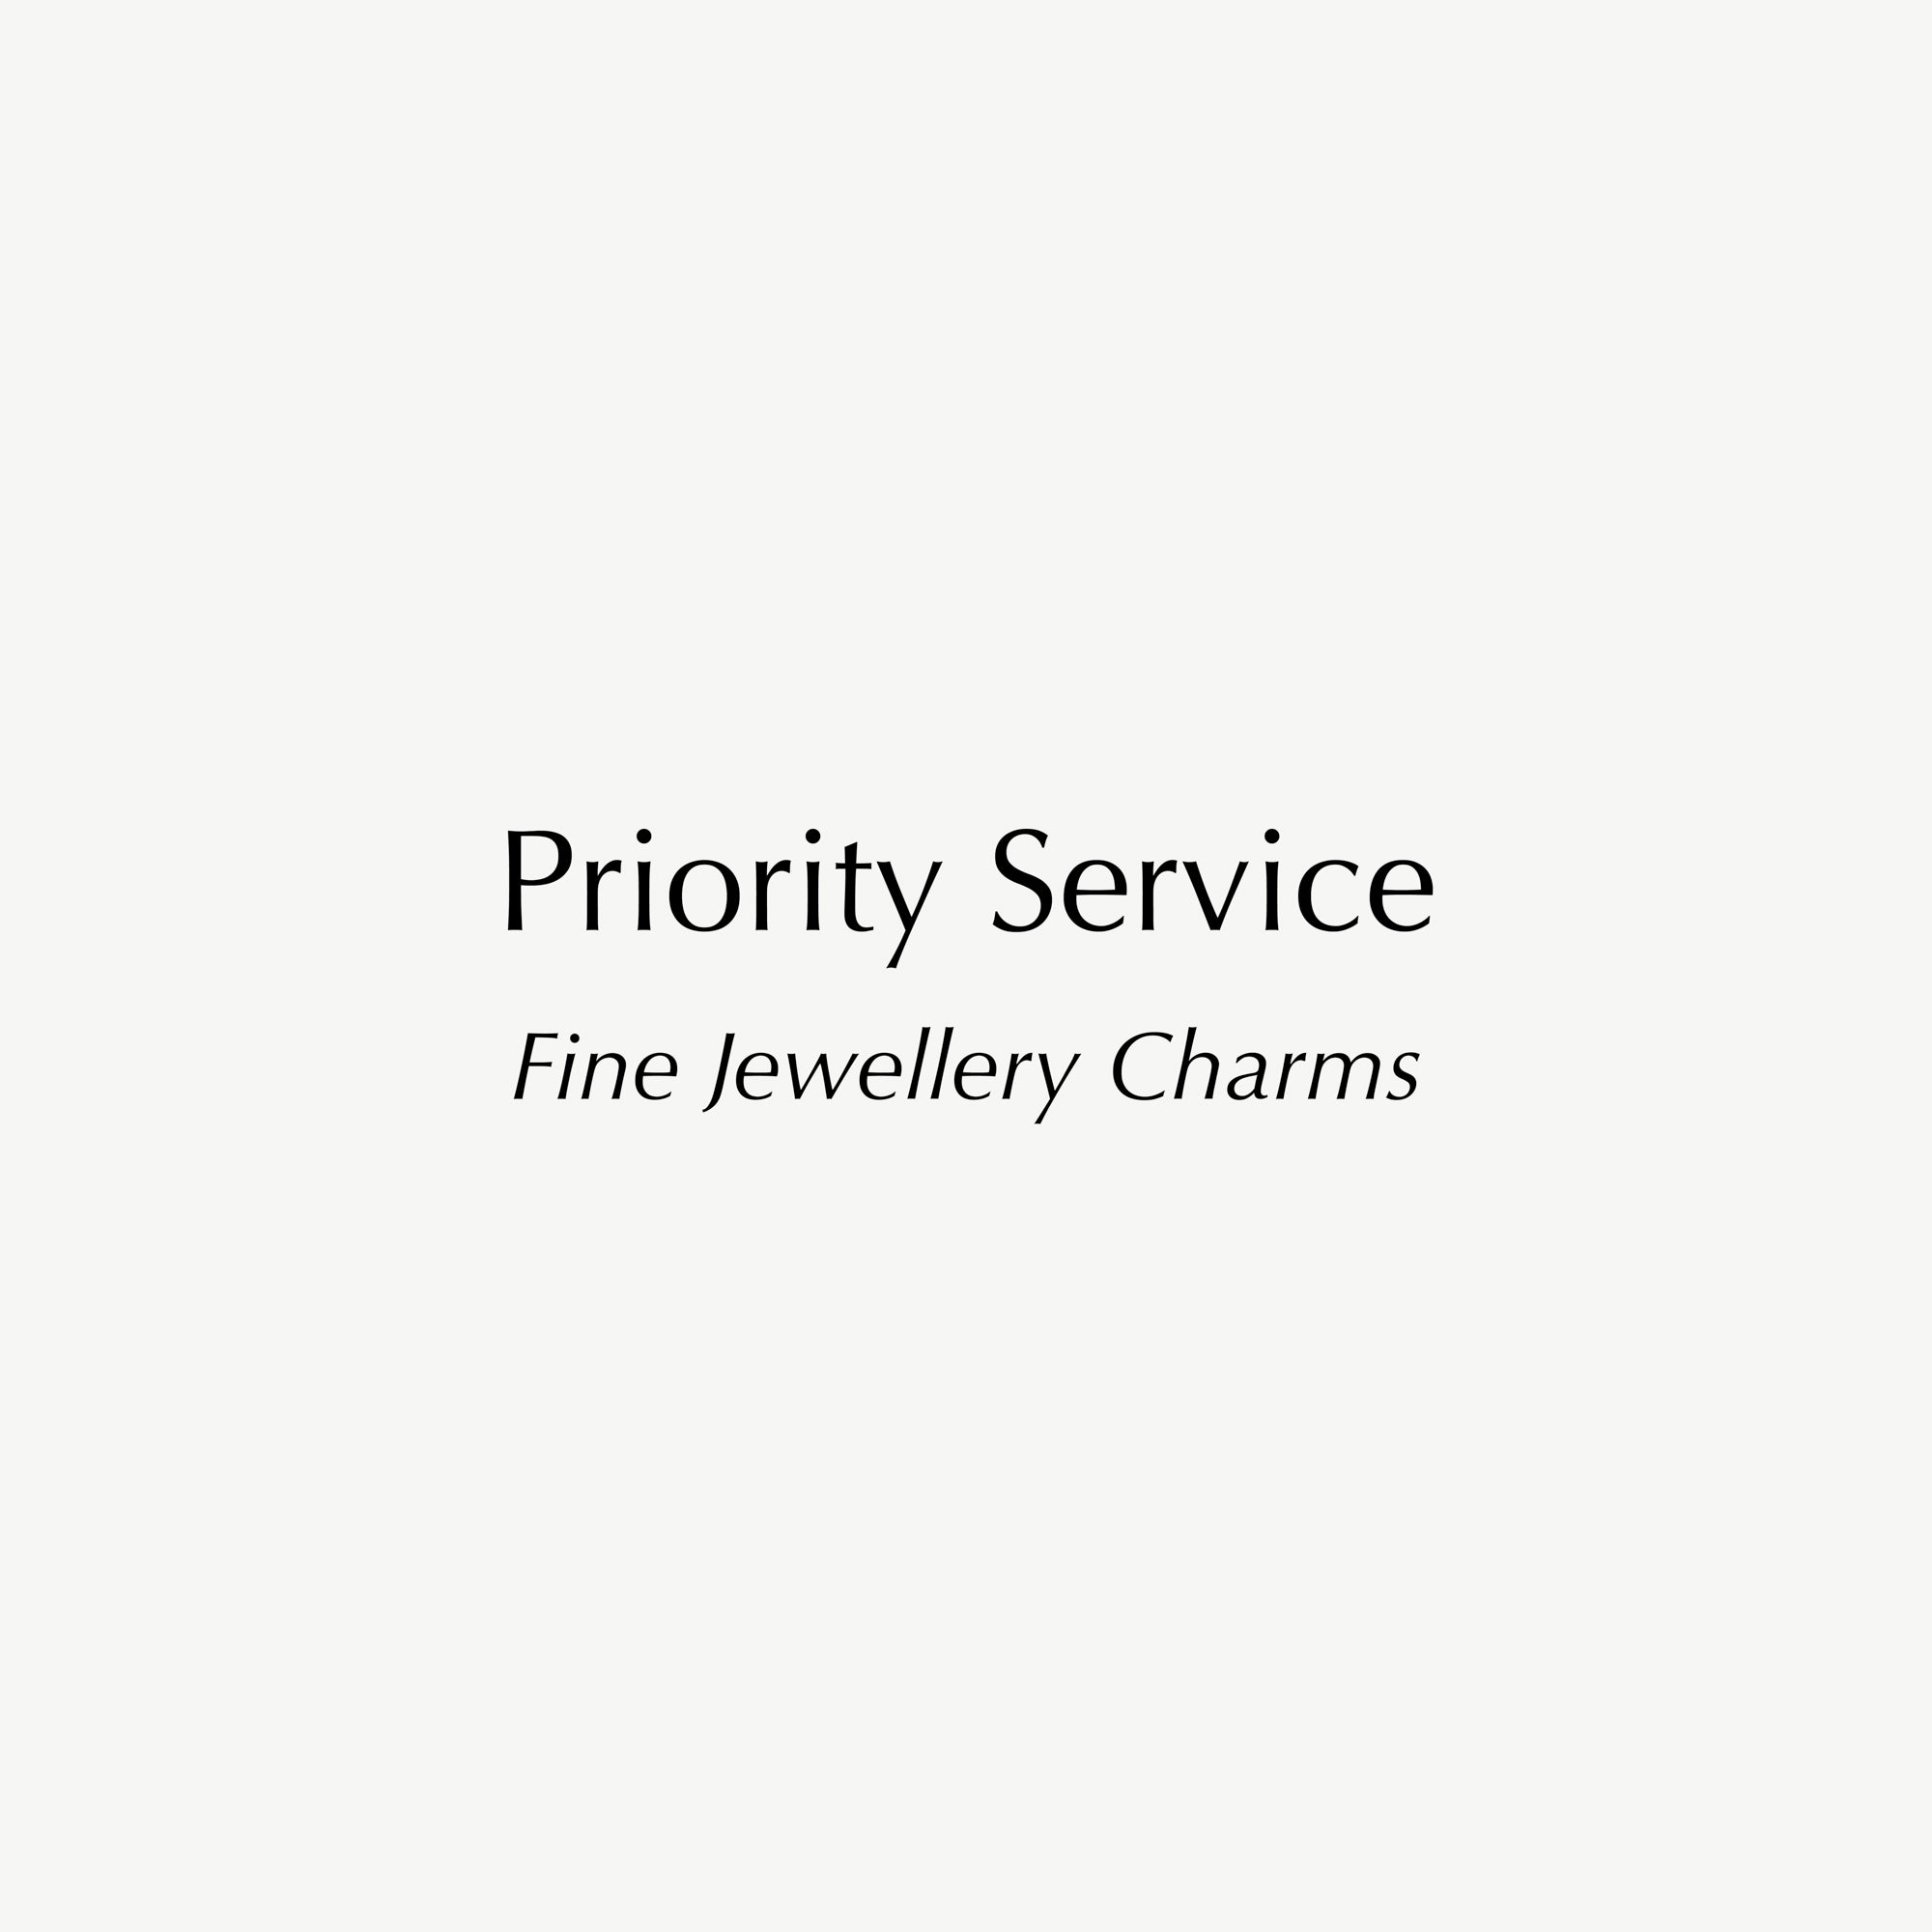 Priority Service - Fine Jewellery Charms